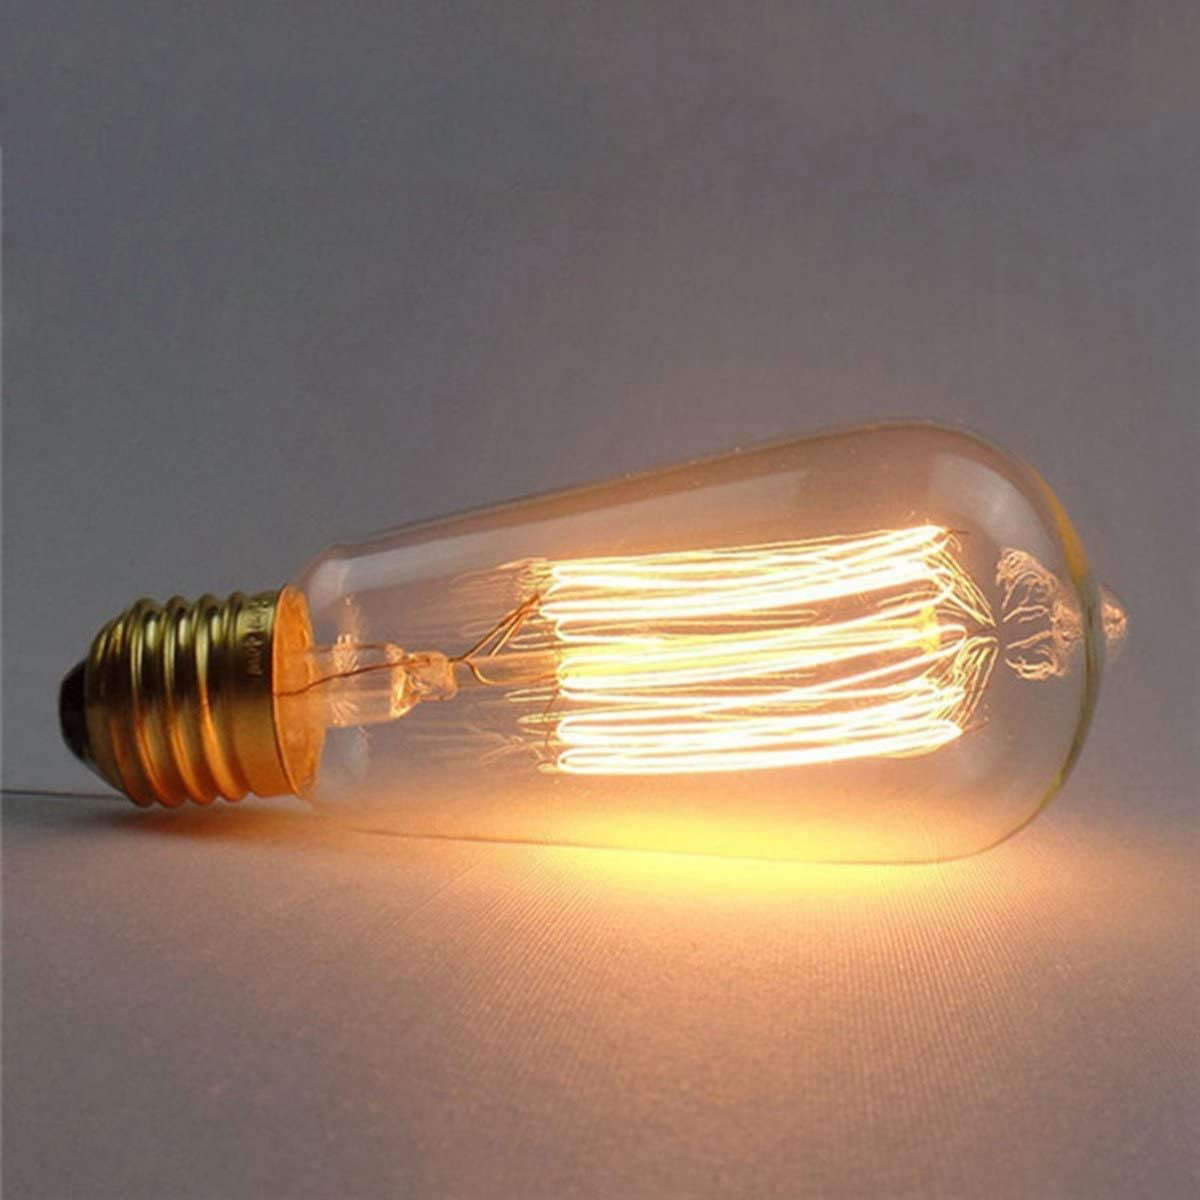 6 x Edison E27 60W ST64 Retro Filament Vintage Light Bulbs Dimmable Industrial